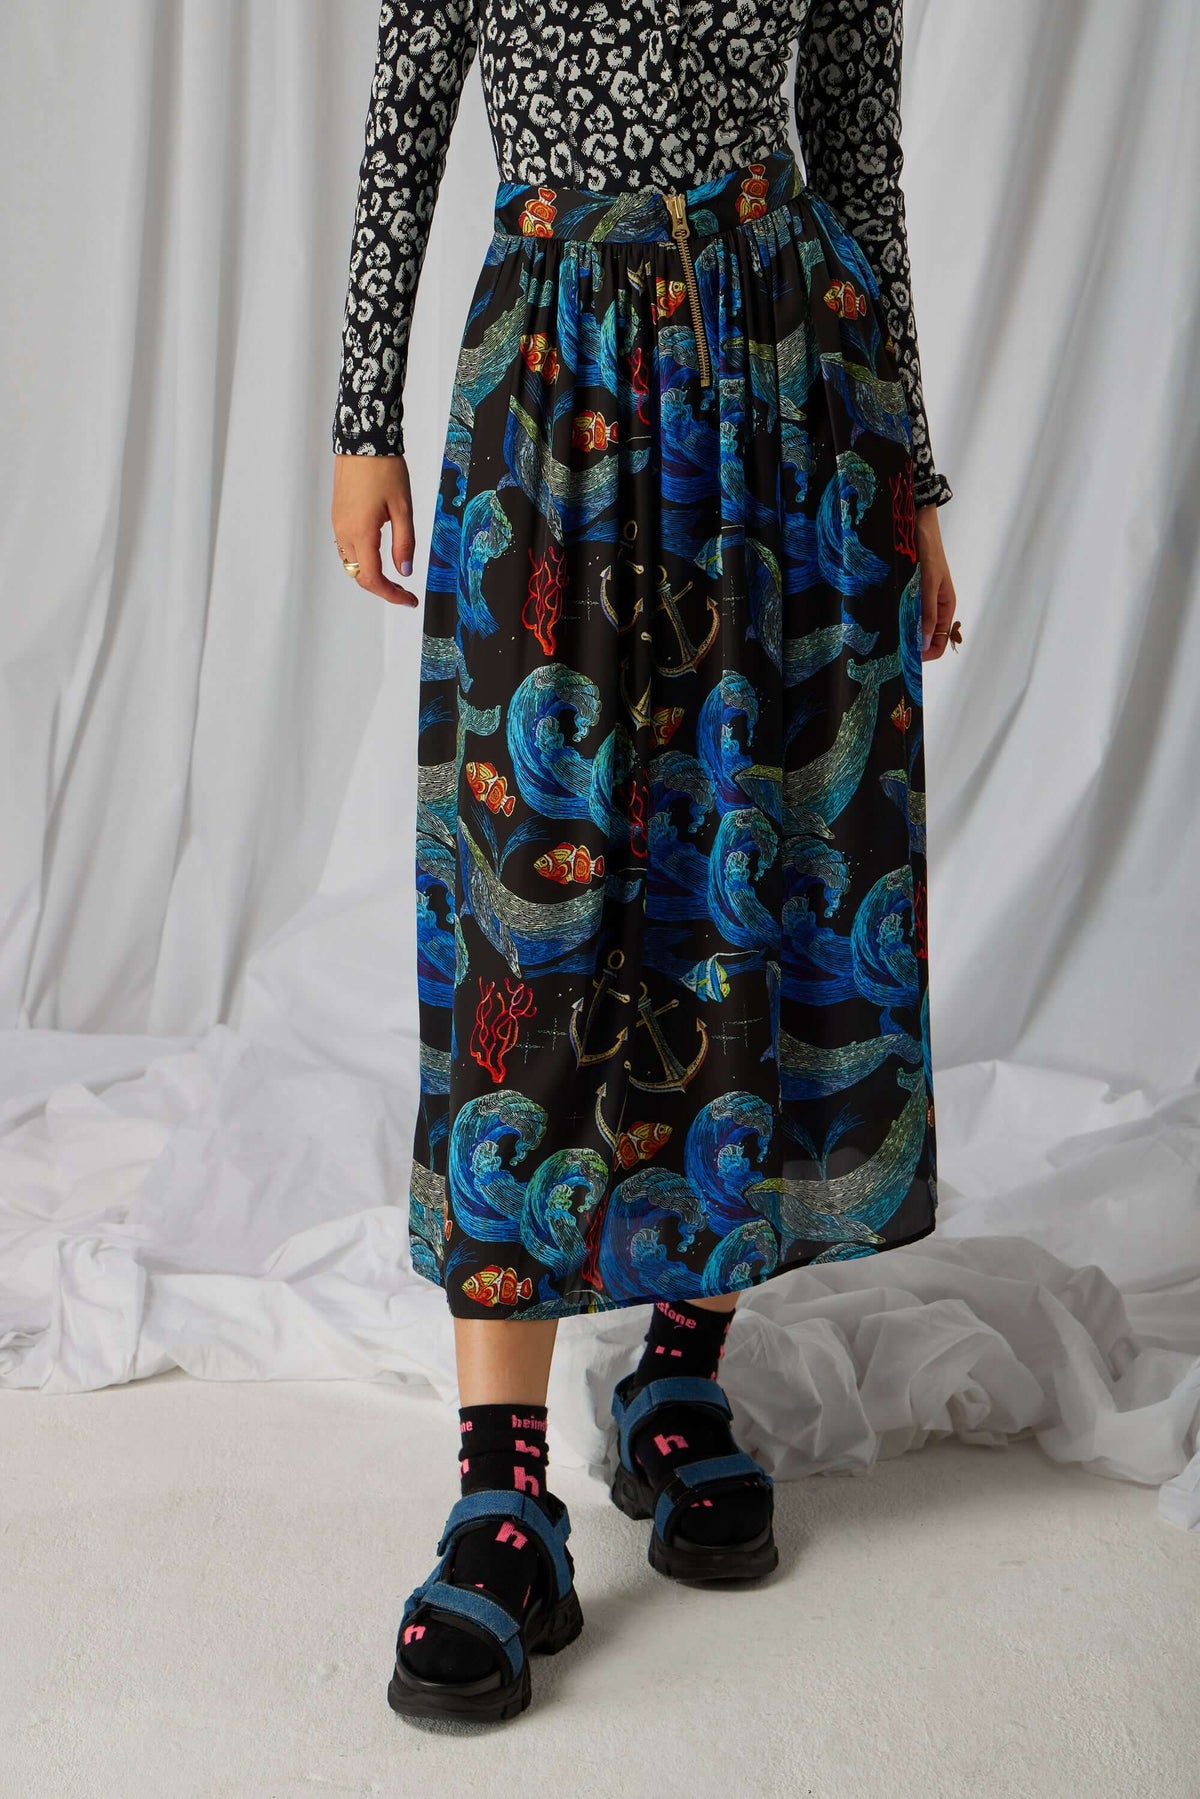 Orso skirt in Storm print